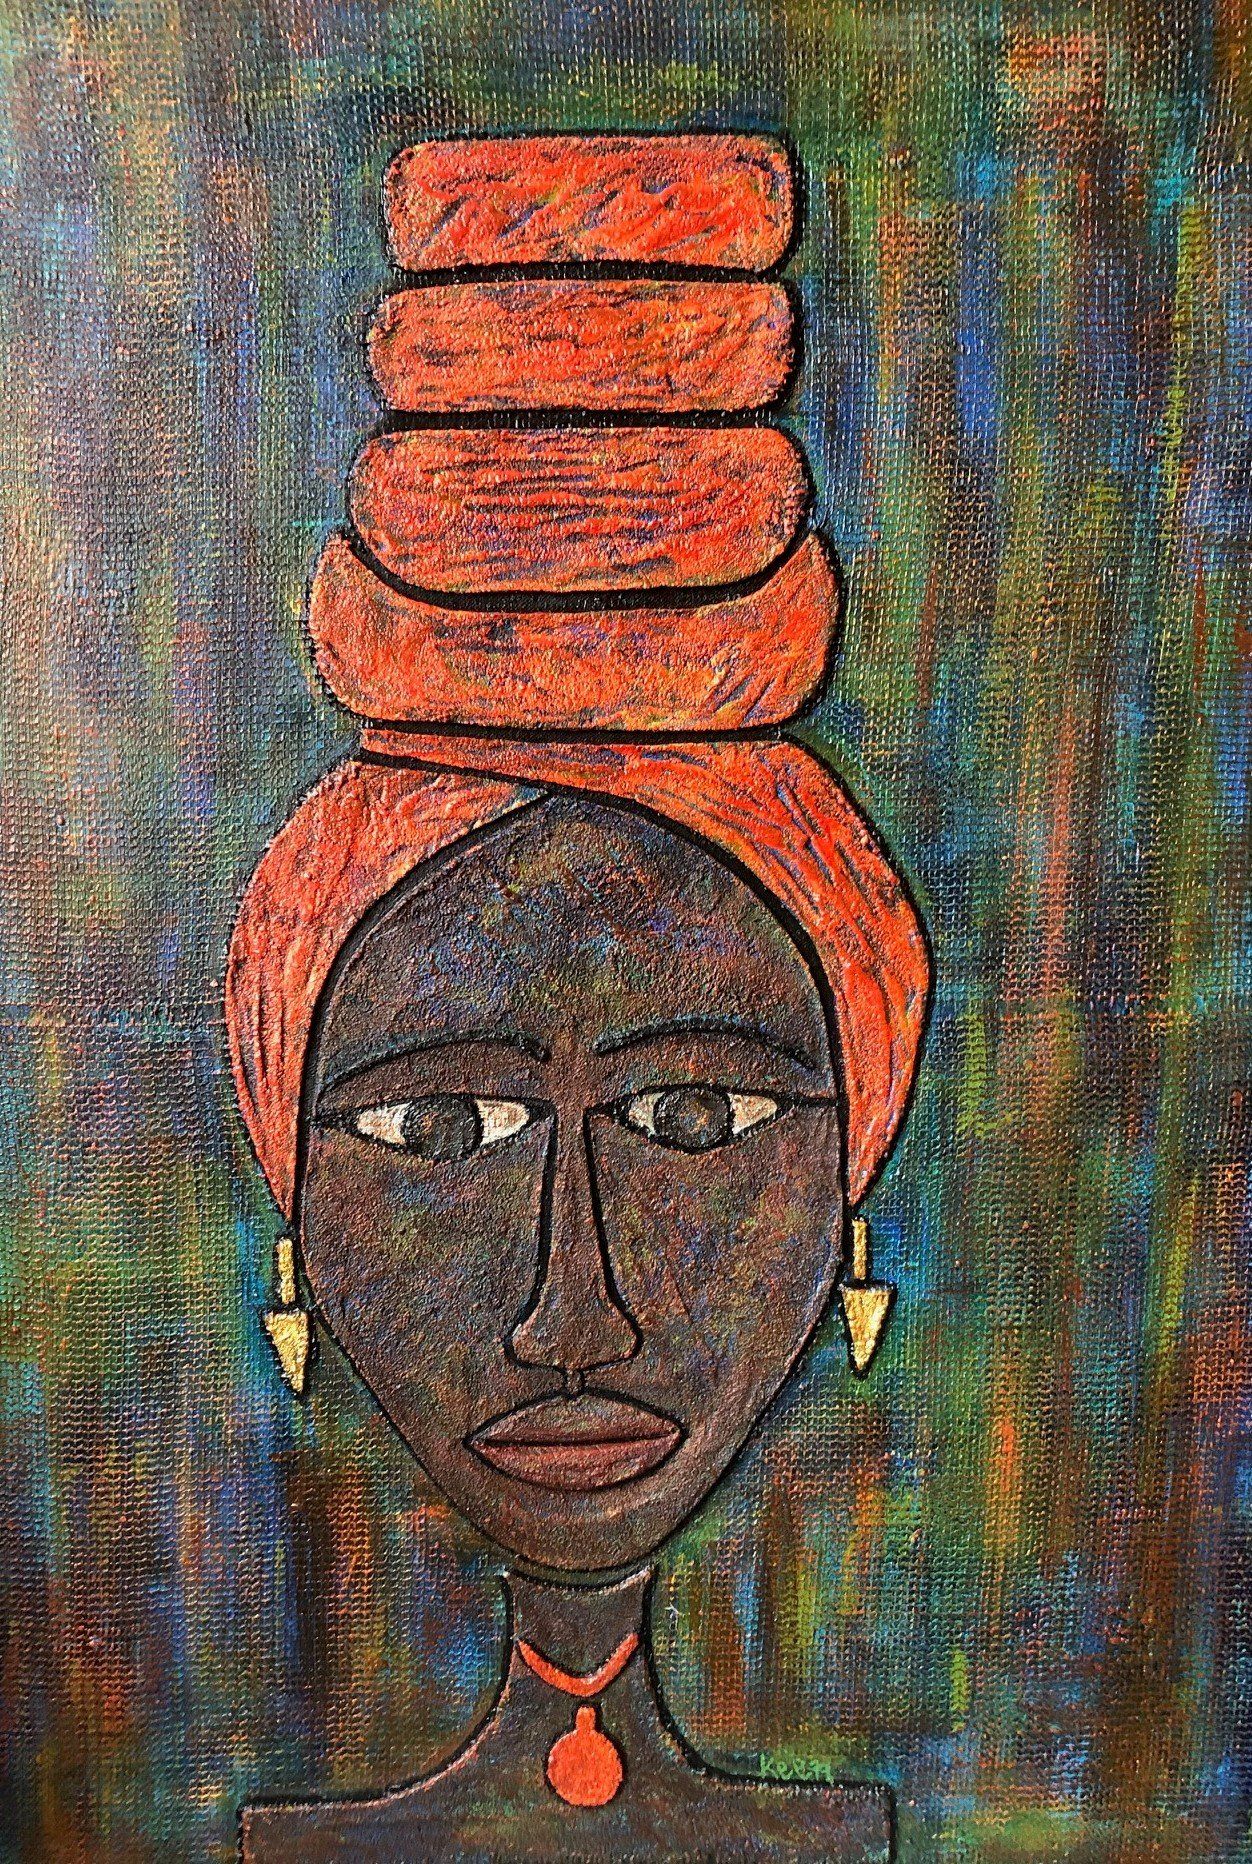 A Black Woman Art Piece